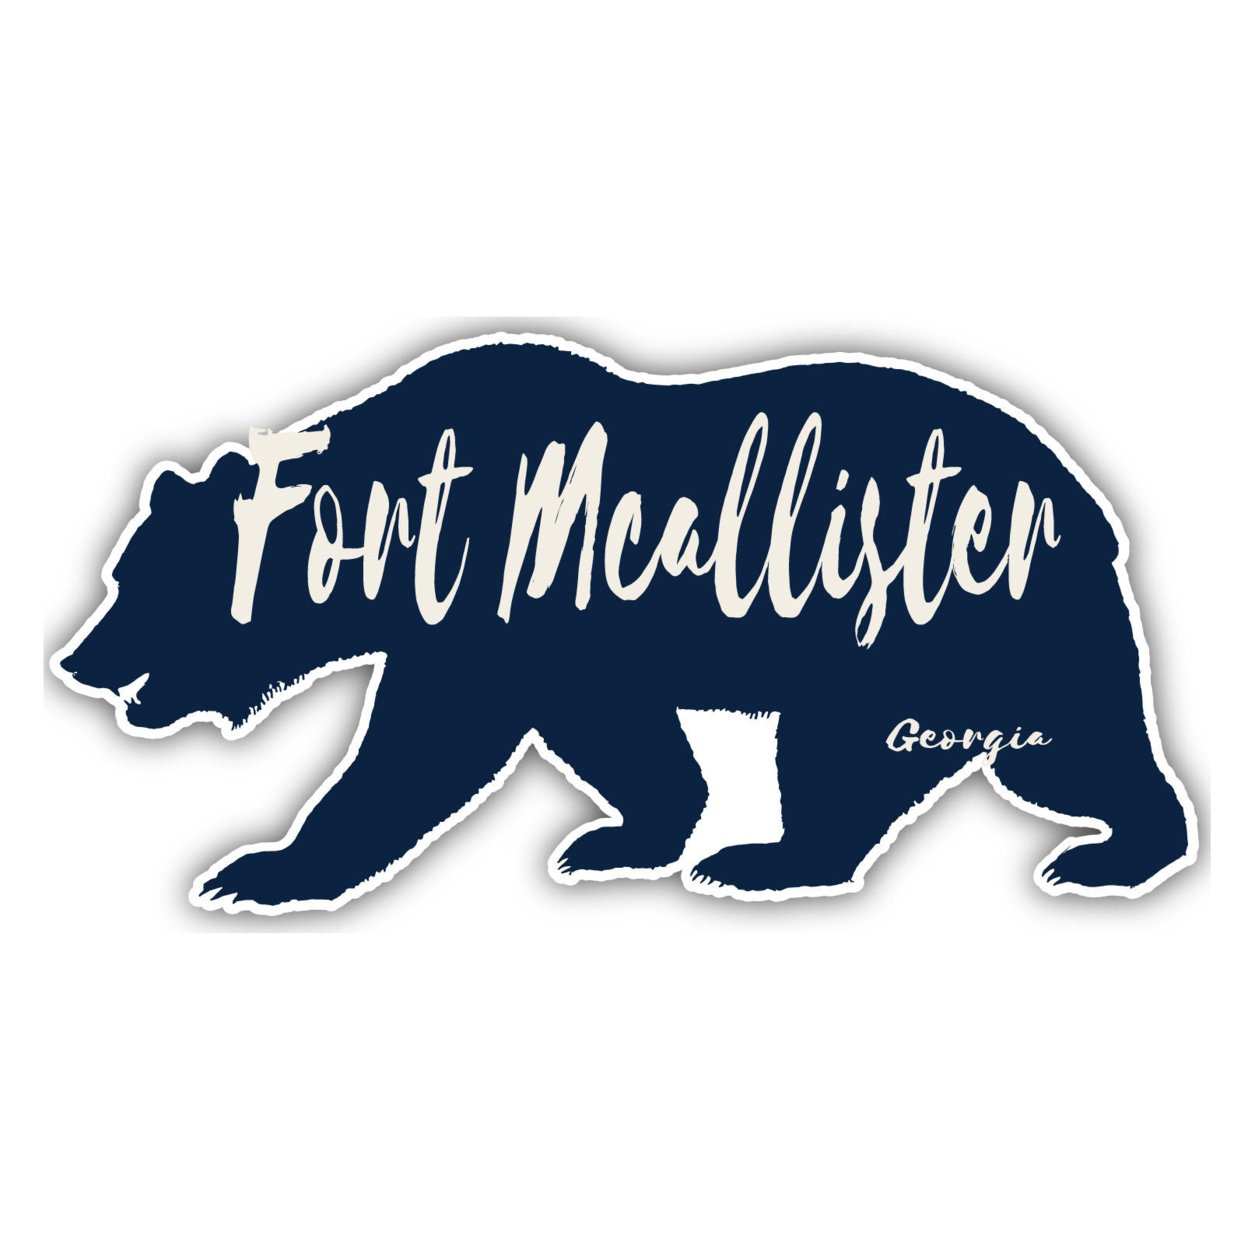 Fort McAllister Georgia Souvenir Decorative Stickers (Choose Theme And Size) - Single Unit, 8-Inch, Bear